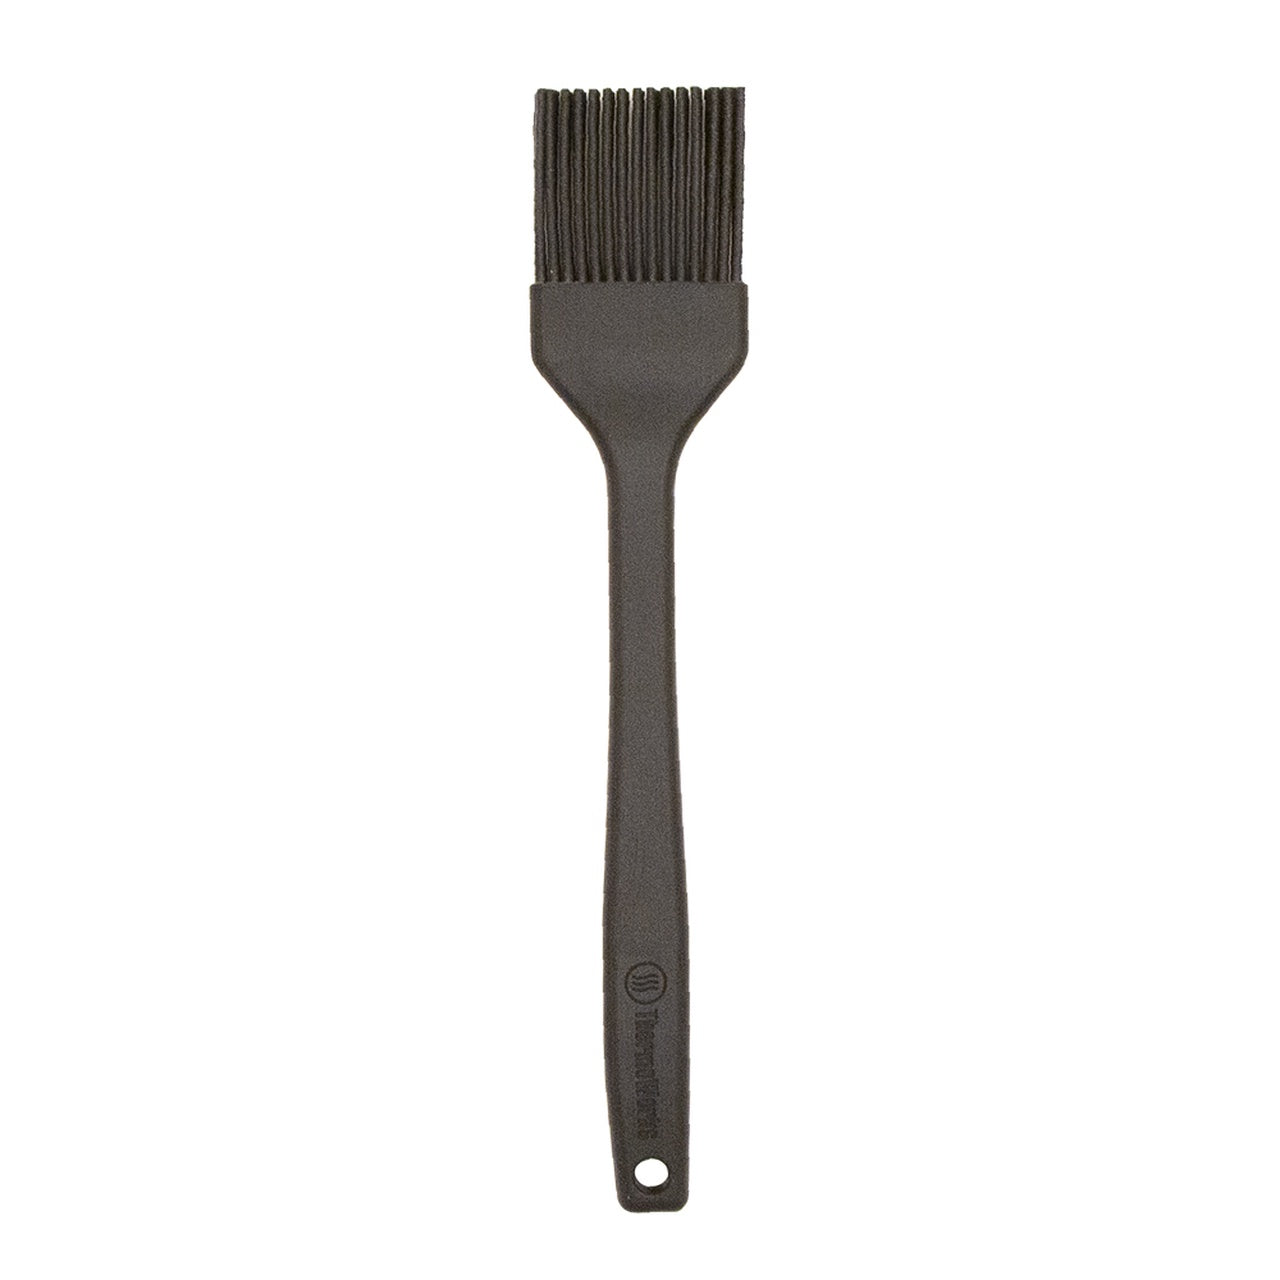 Hi-Temp Silicone Brushes